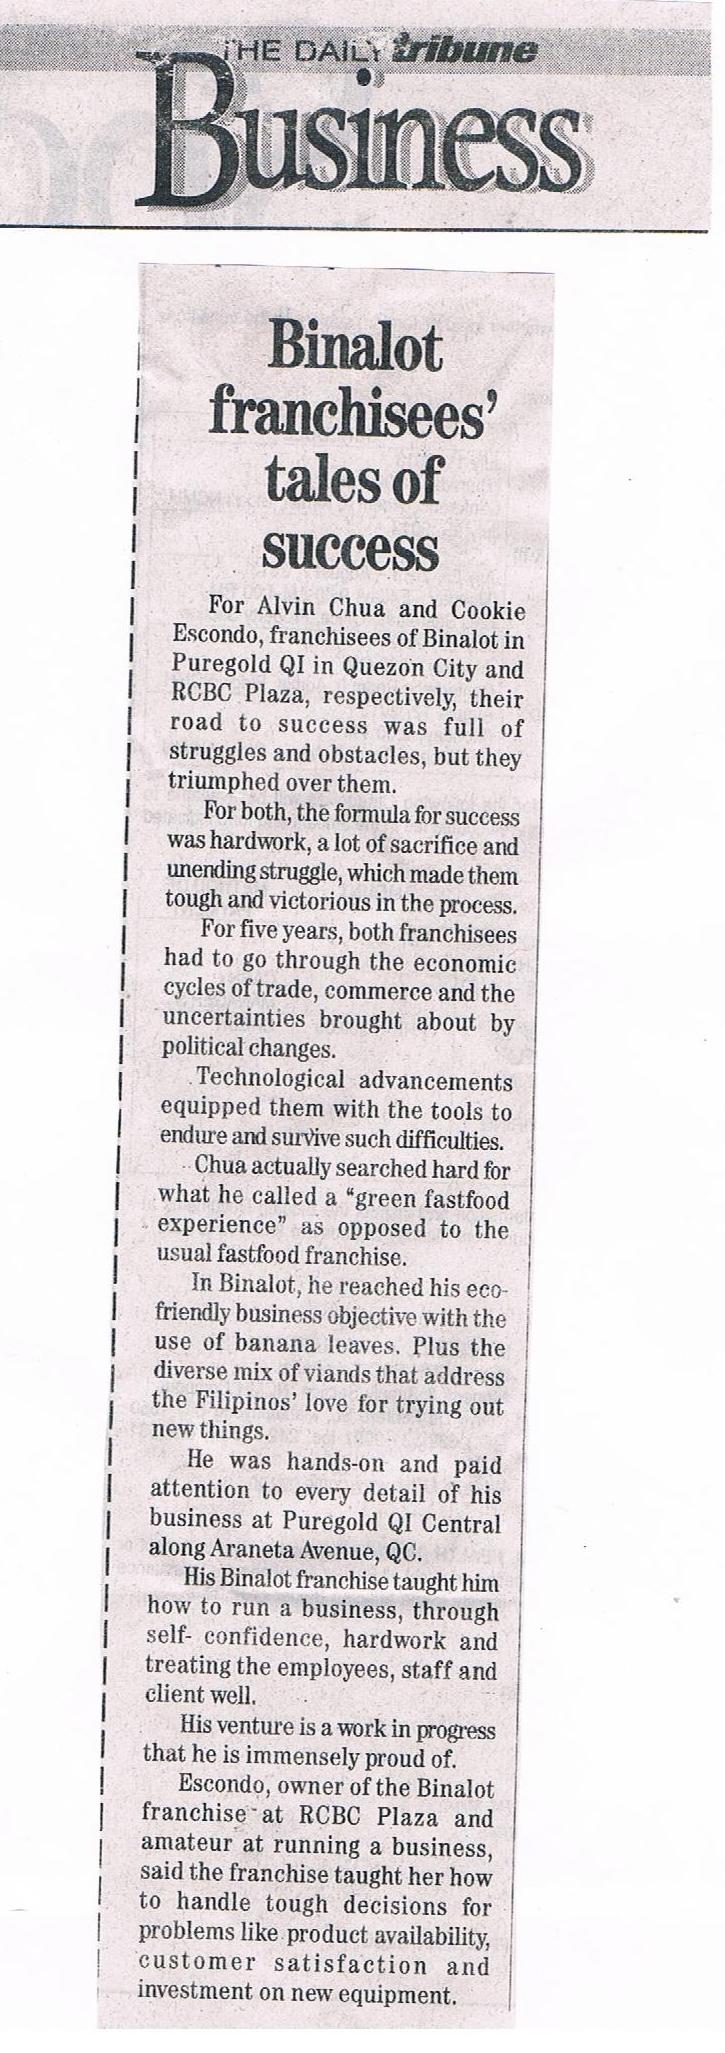 Binalot franchisees'tales of success, July 25, 2013, Daily Tribune